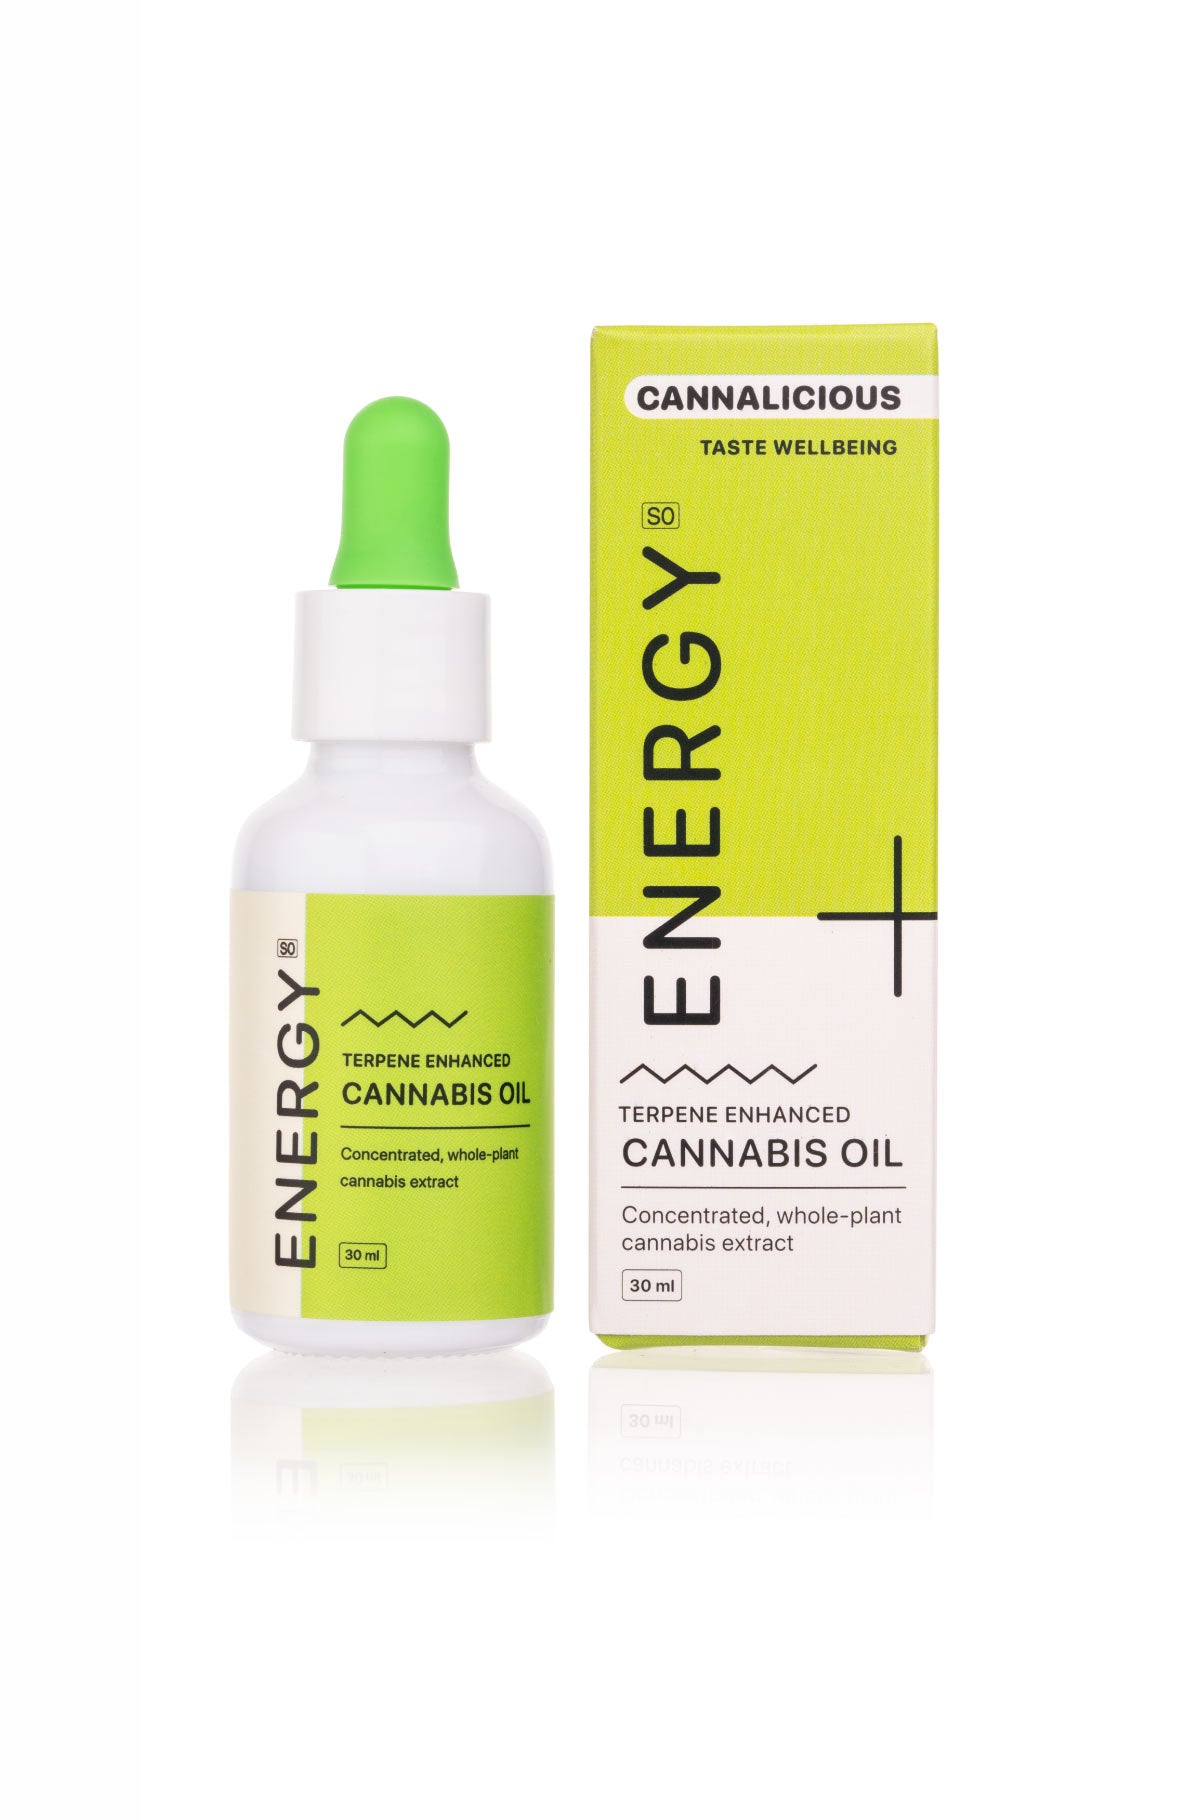 Cannalicious Full Extract Cannabis Oil – Energy Boost